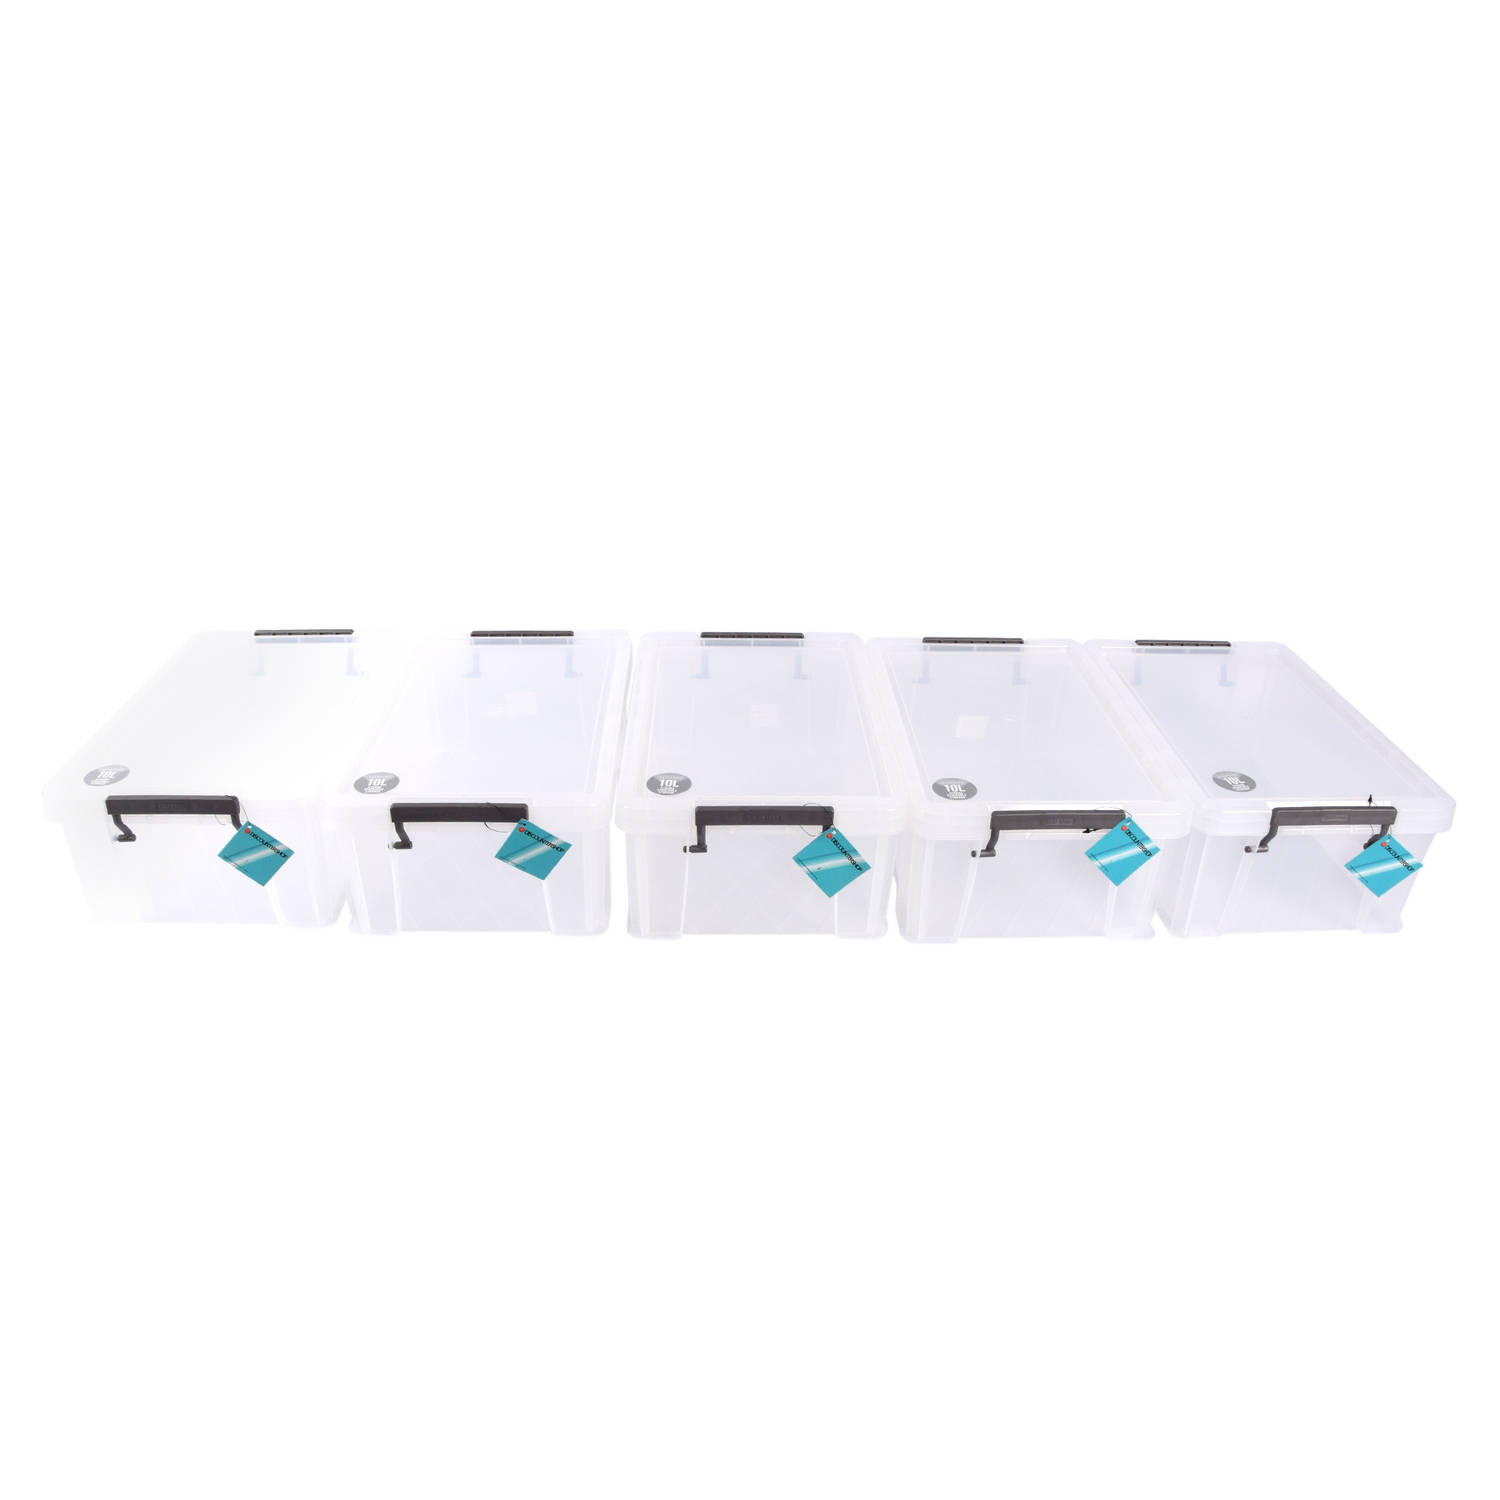 Opbergboxen Set van 5 - Kunststof Opslagboxen met Deksel Transparant Huishoud Organizers - 39.5cm x 25.5cm x 15cm - Met Klikdeksel - 10L elke Stuk